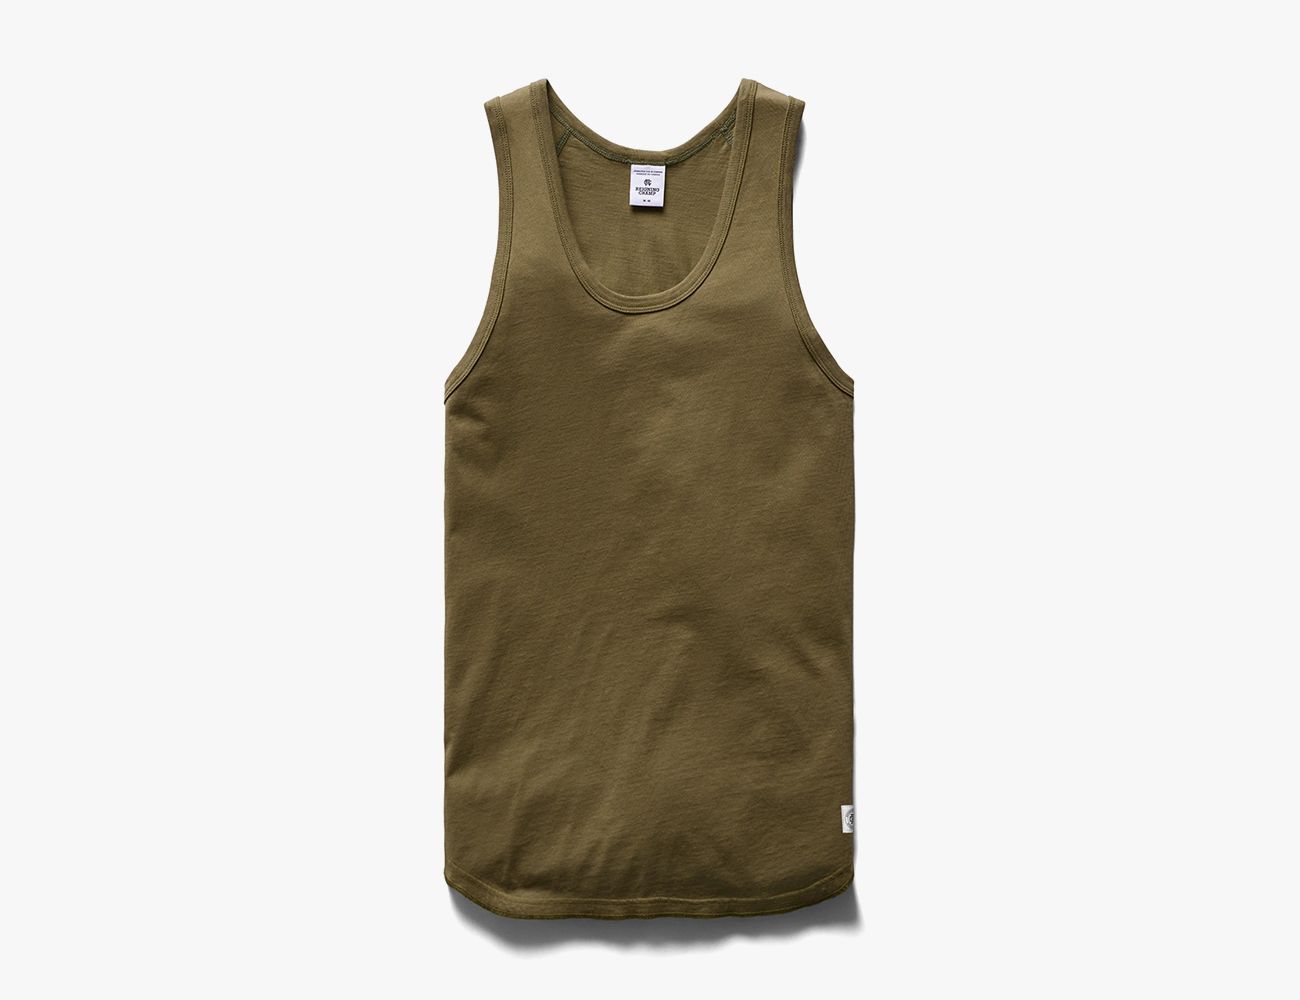 V VICROAD Men’s Lightweight Tank Top Undershirt Quick Dry Athletic Sleeveless Shirts 